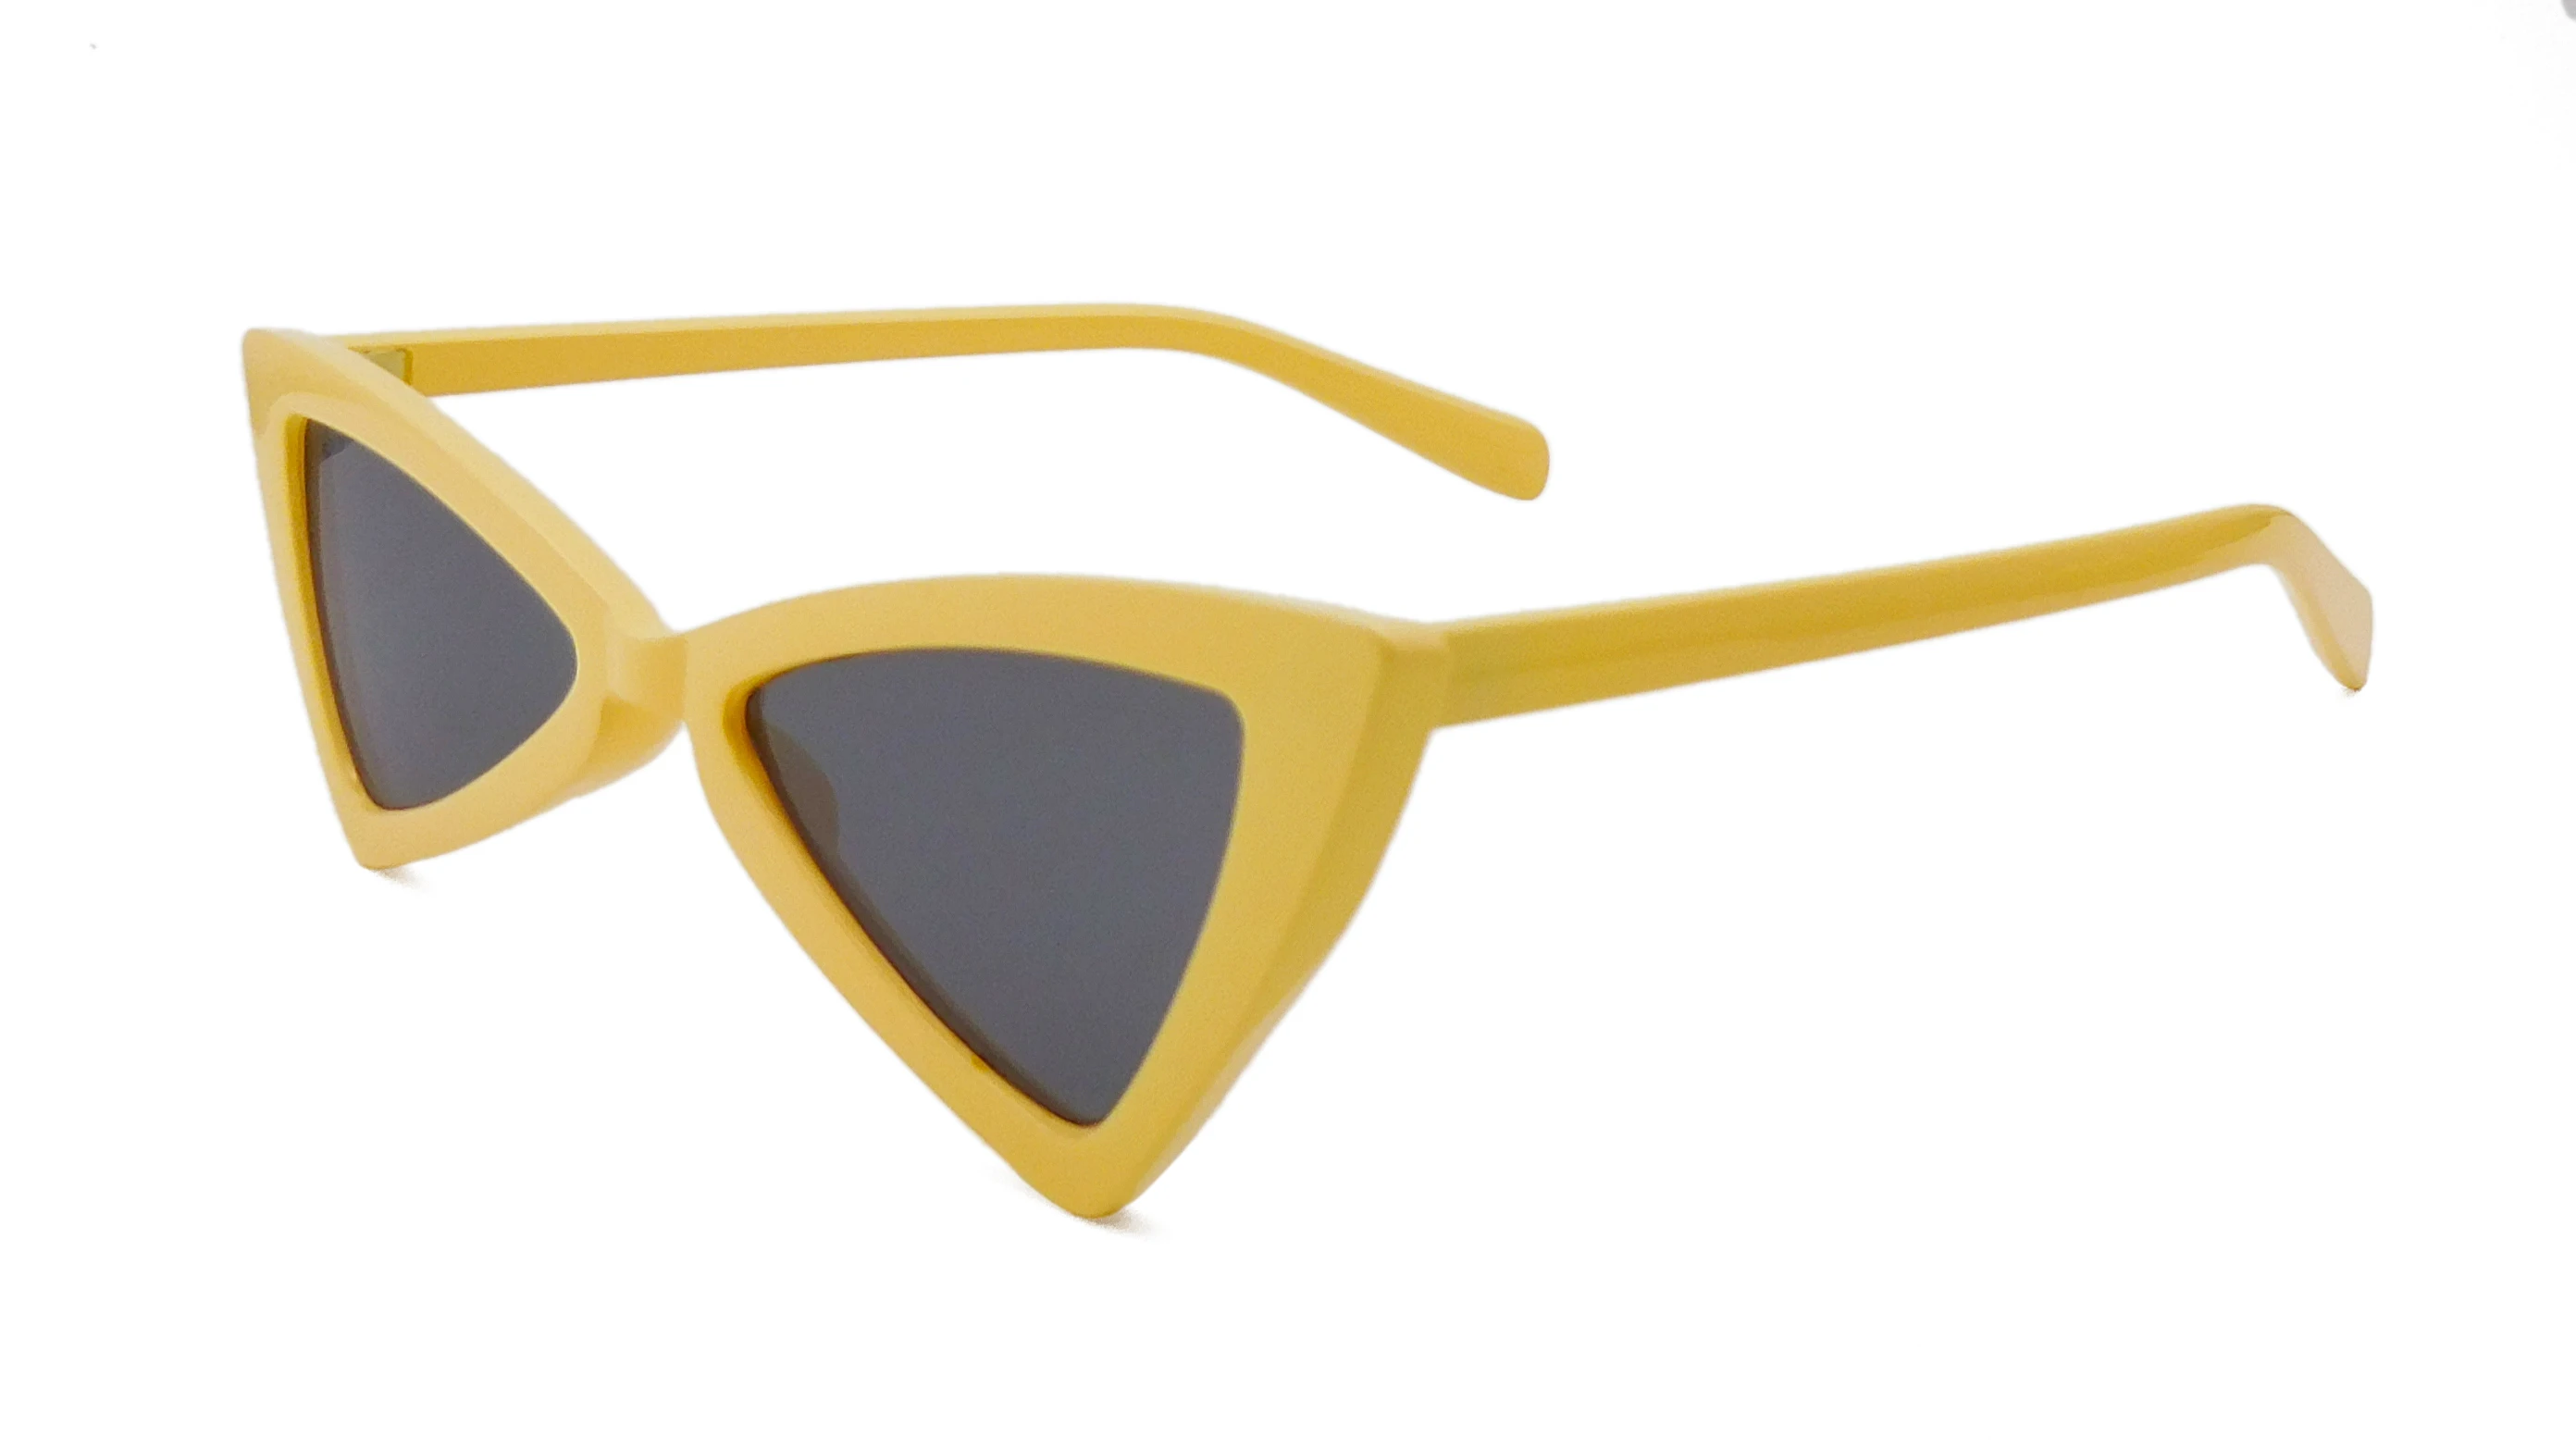 Eugenia beautiful design oversized cat eye sunglasses for Travel-7